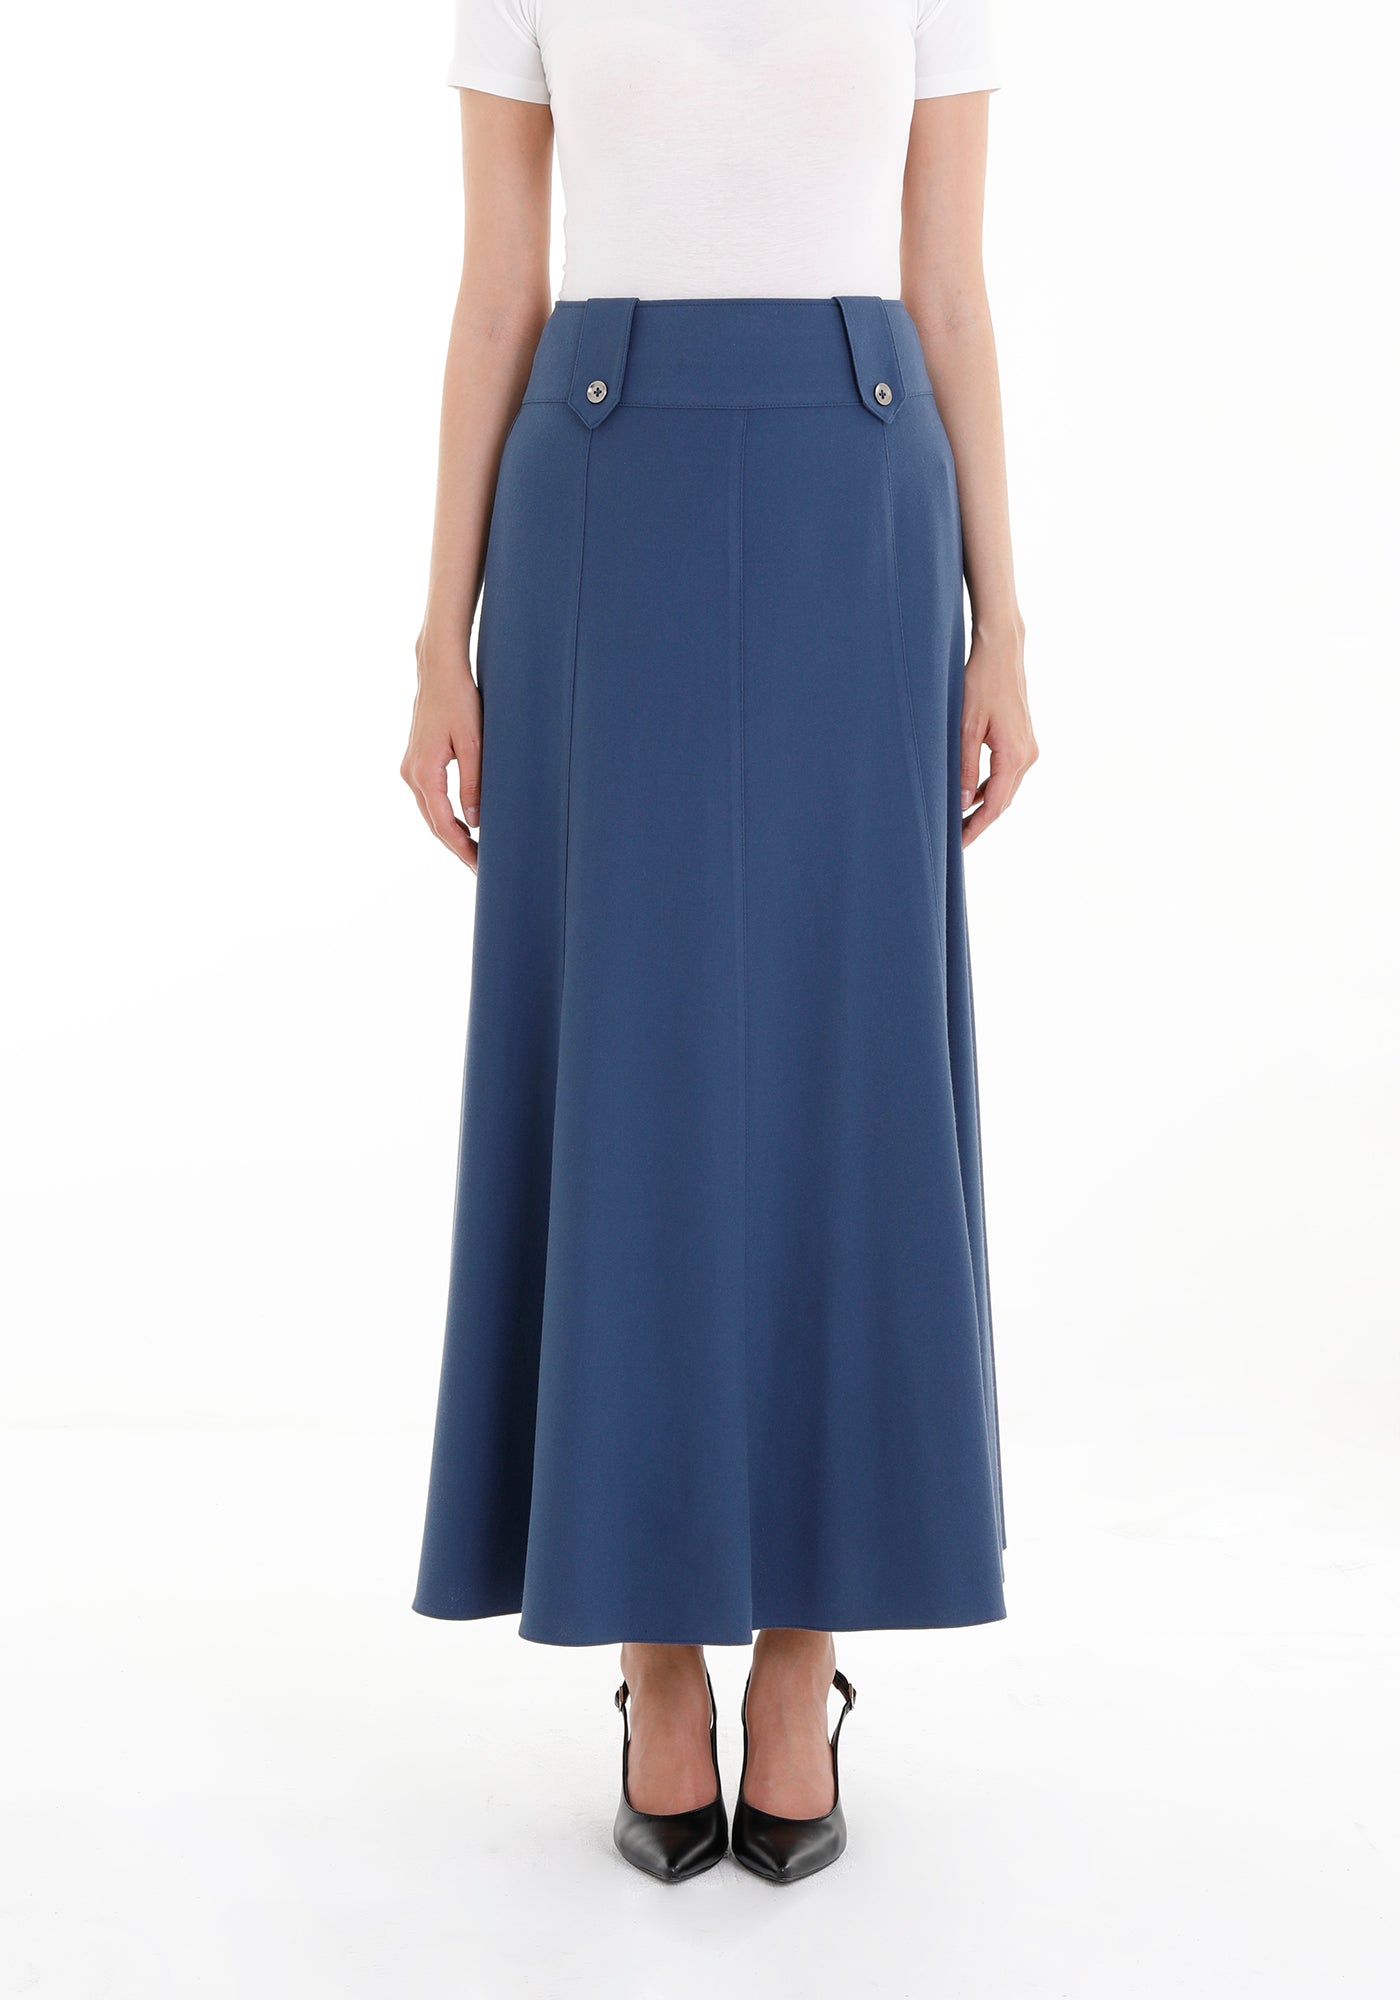 Indigo Flared Maxi Skirt with Unique Gores | Comfortable and Stylish ürününün kopyası G-Line